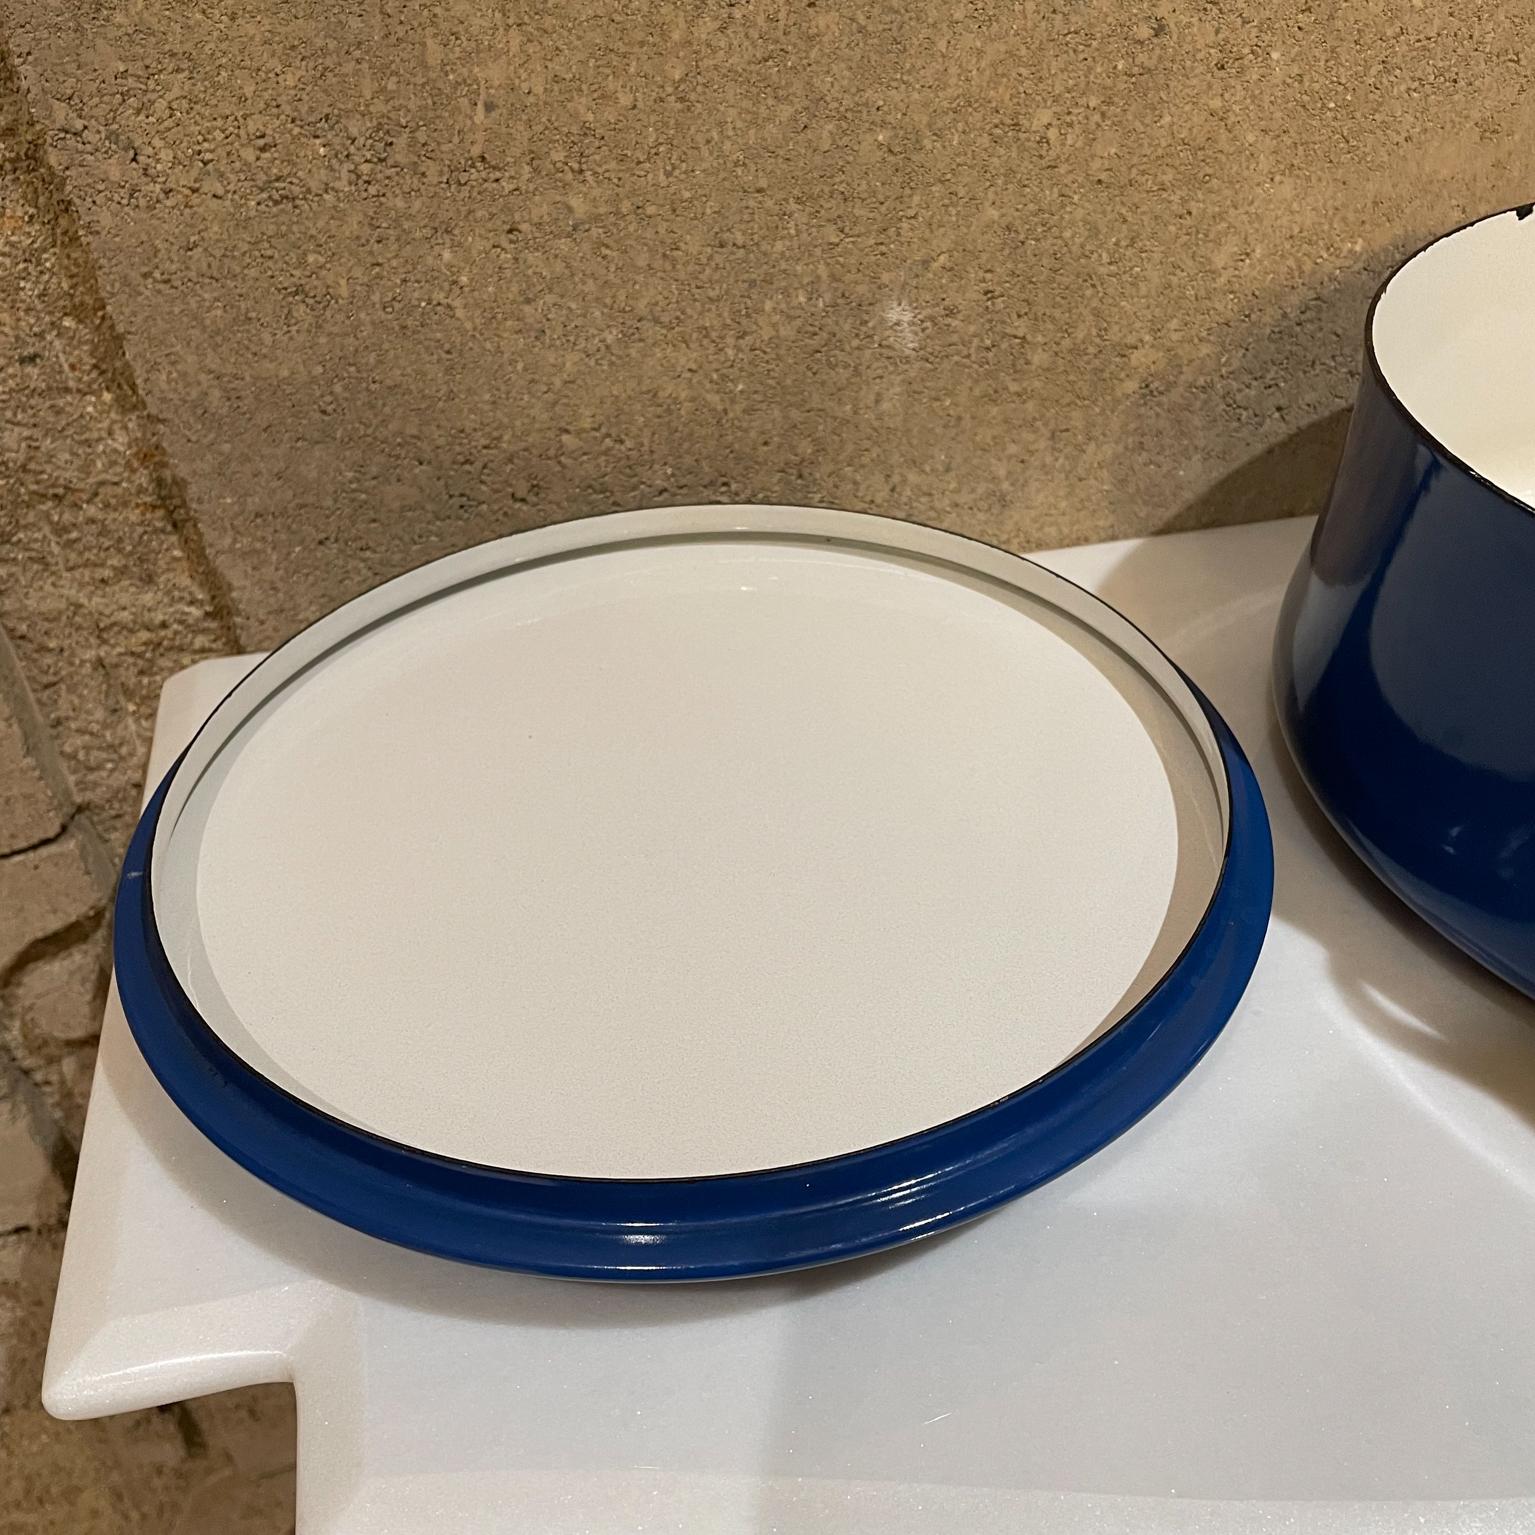 Dansk Designs Blue Enamelware Casserole Pot with Trivet Top IHQ France 1